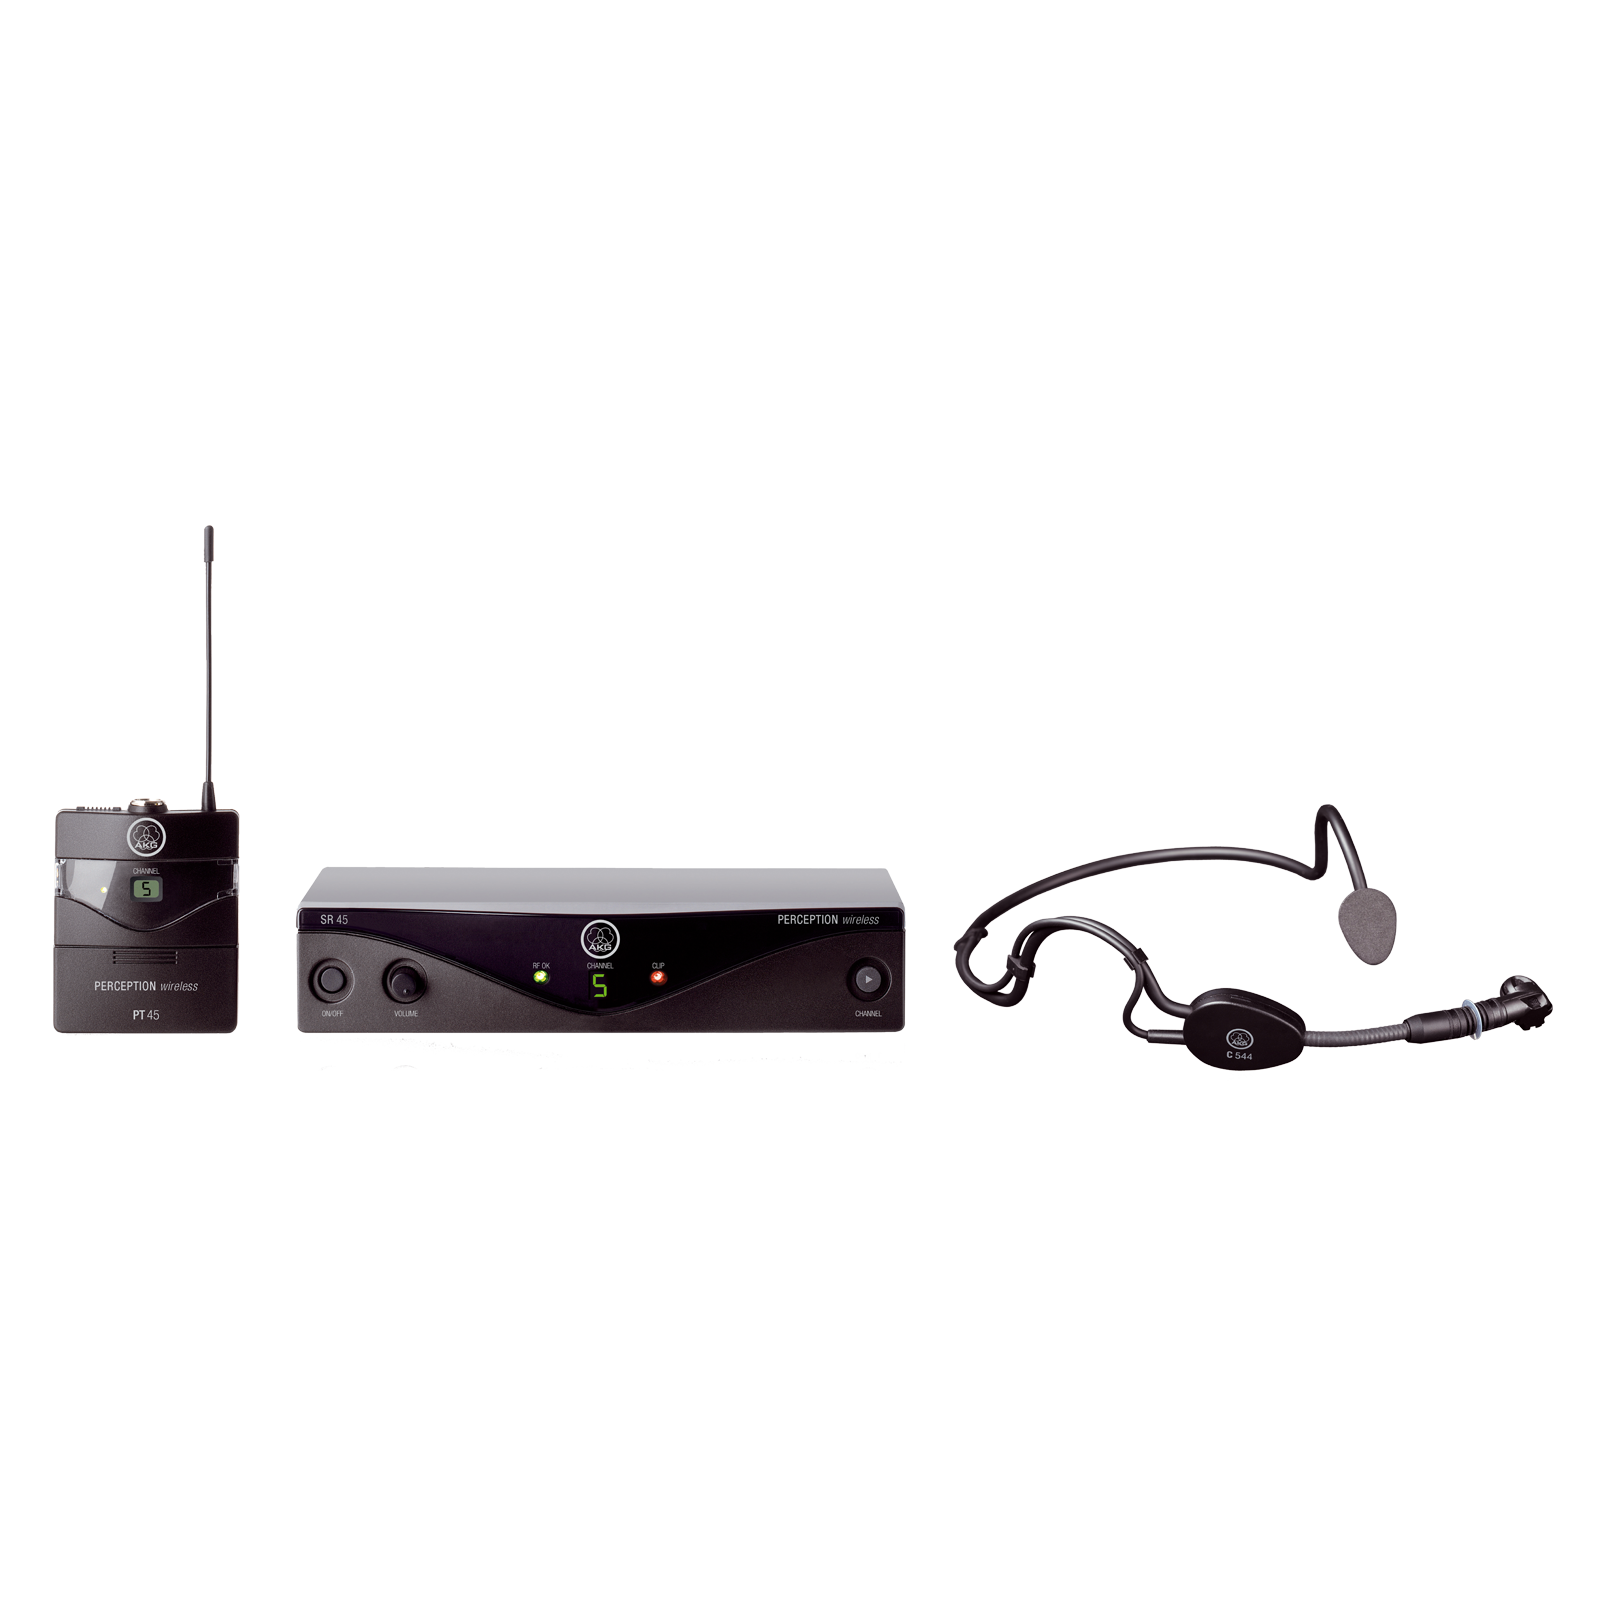 Perception Wireless 45 Sports Set Band-C1 - Black - High-performance wireless microphone system - Hero